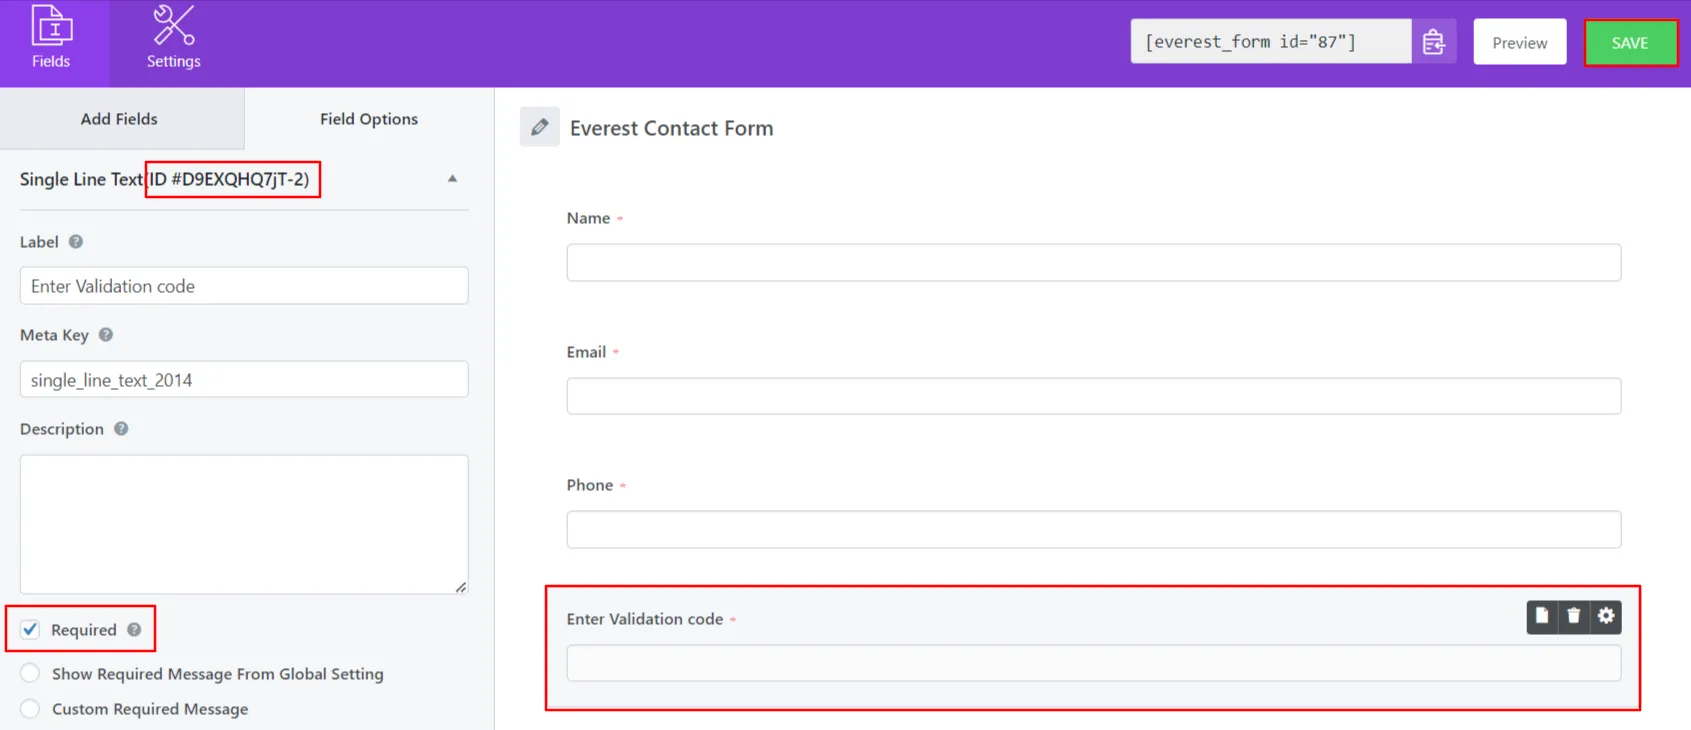 Everest Contact form - Add Verification field